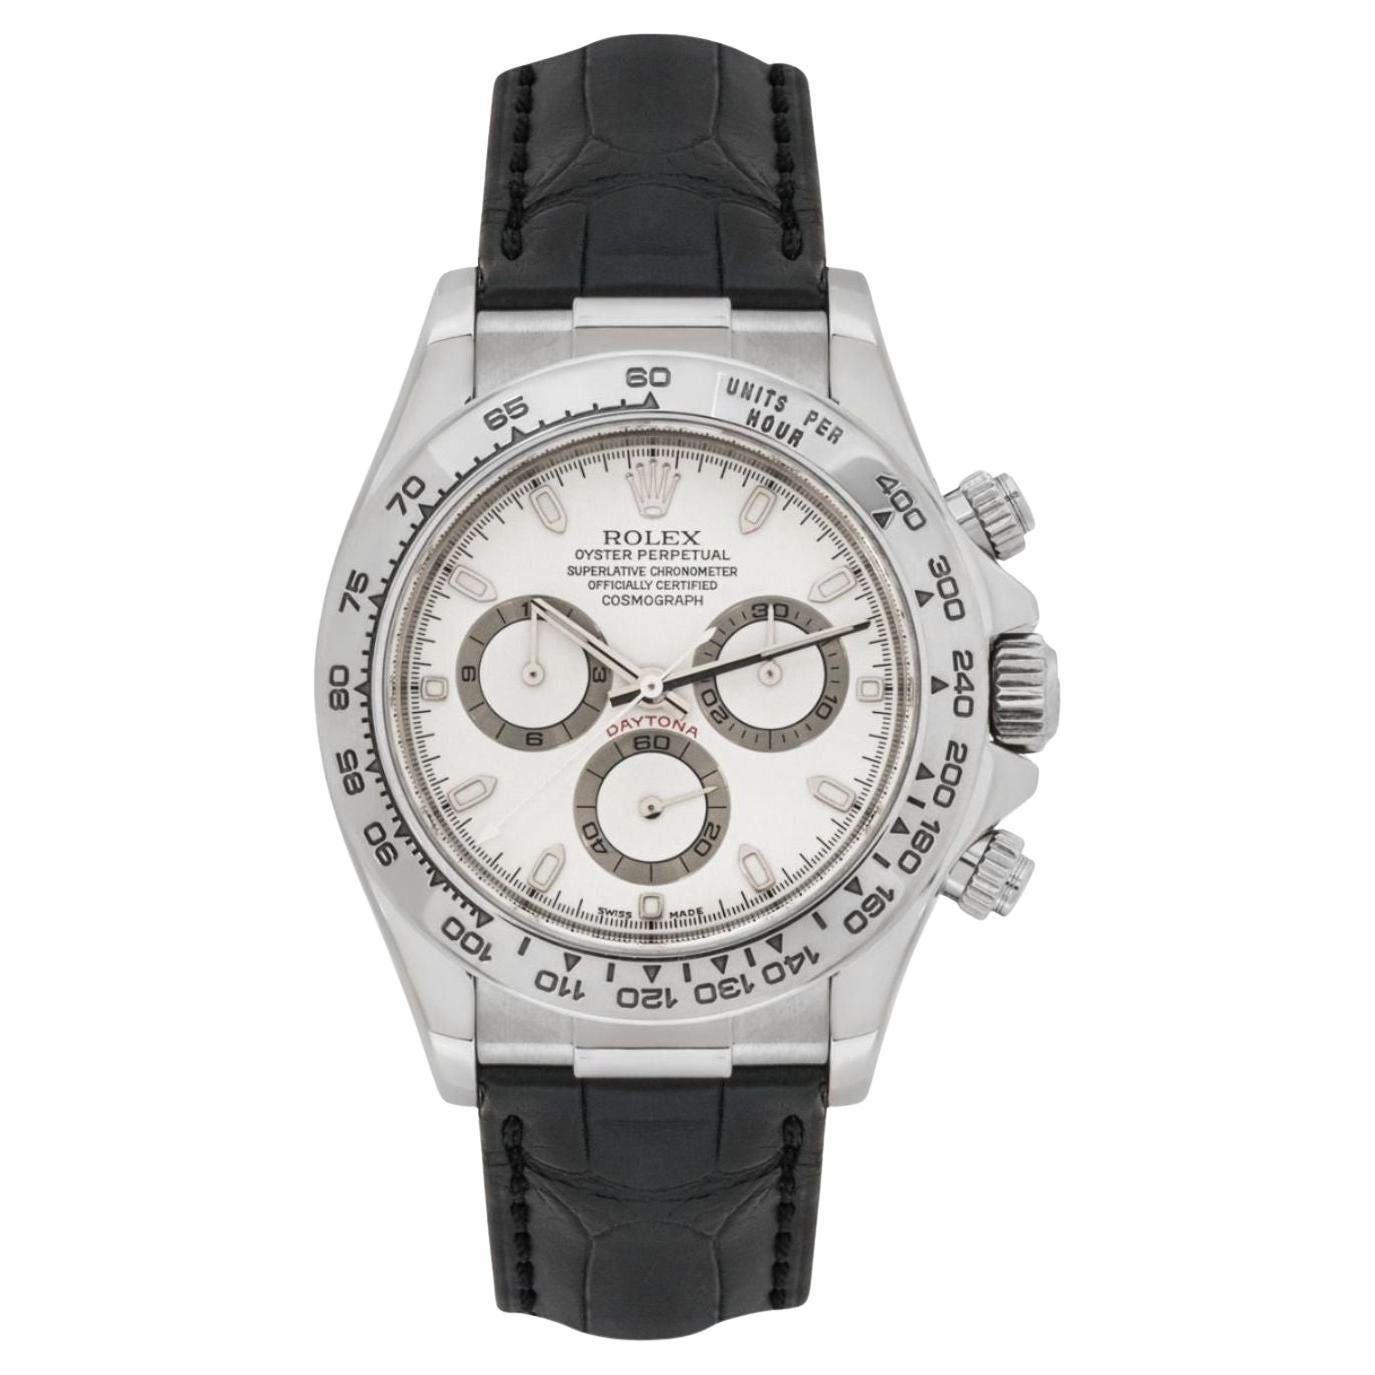 Rolex Daytona White Gold 116519 Watch For Sale